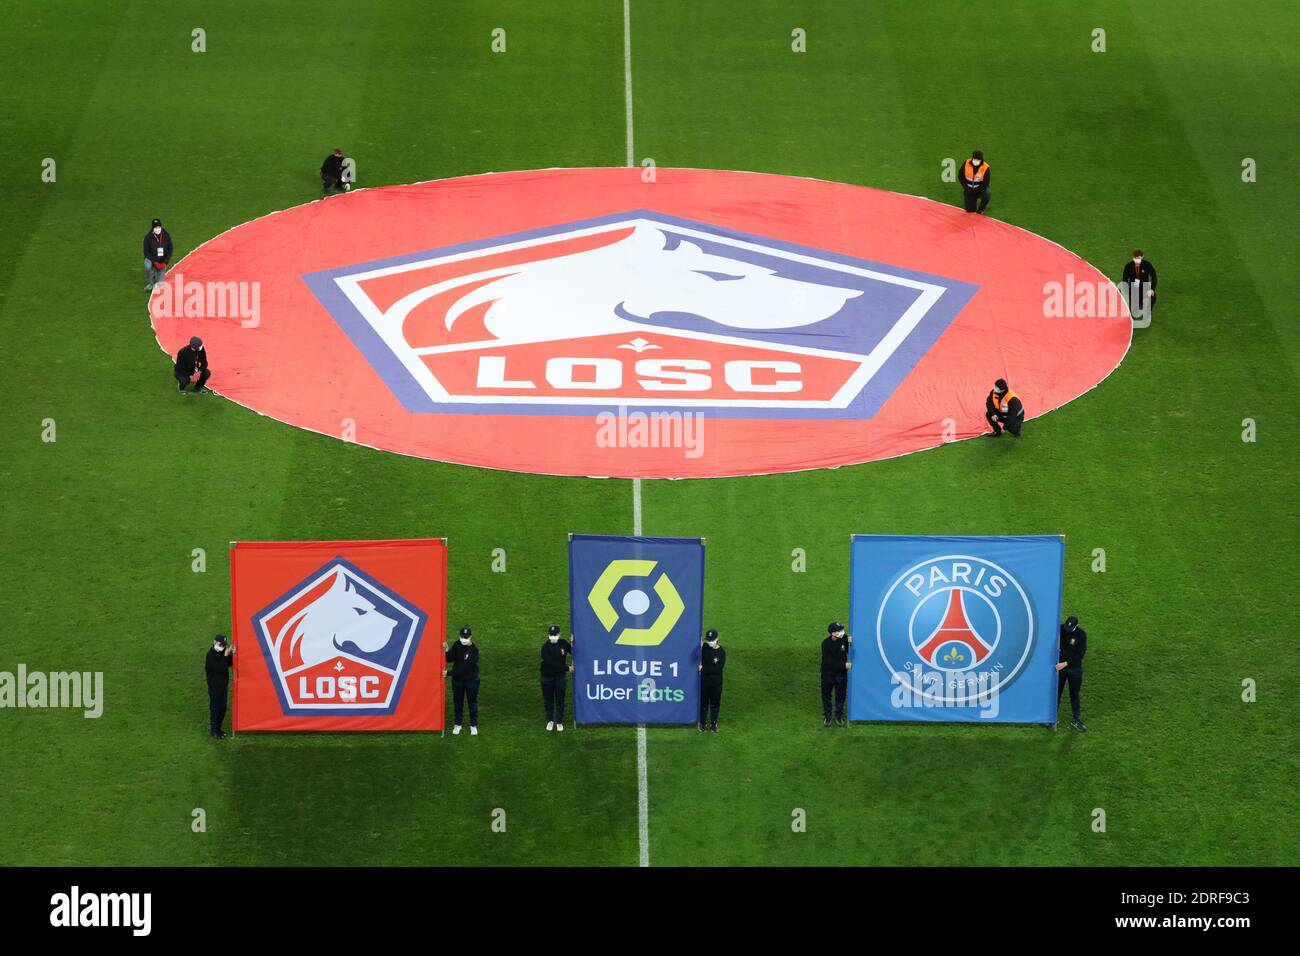 Psg losc vs Ligue 1